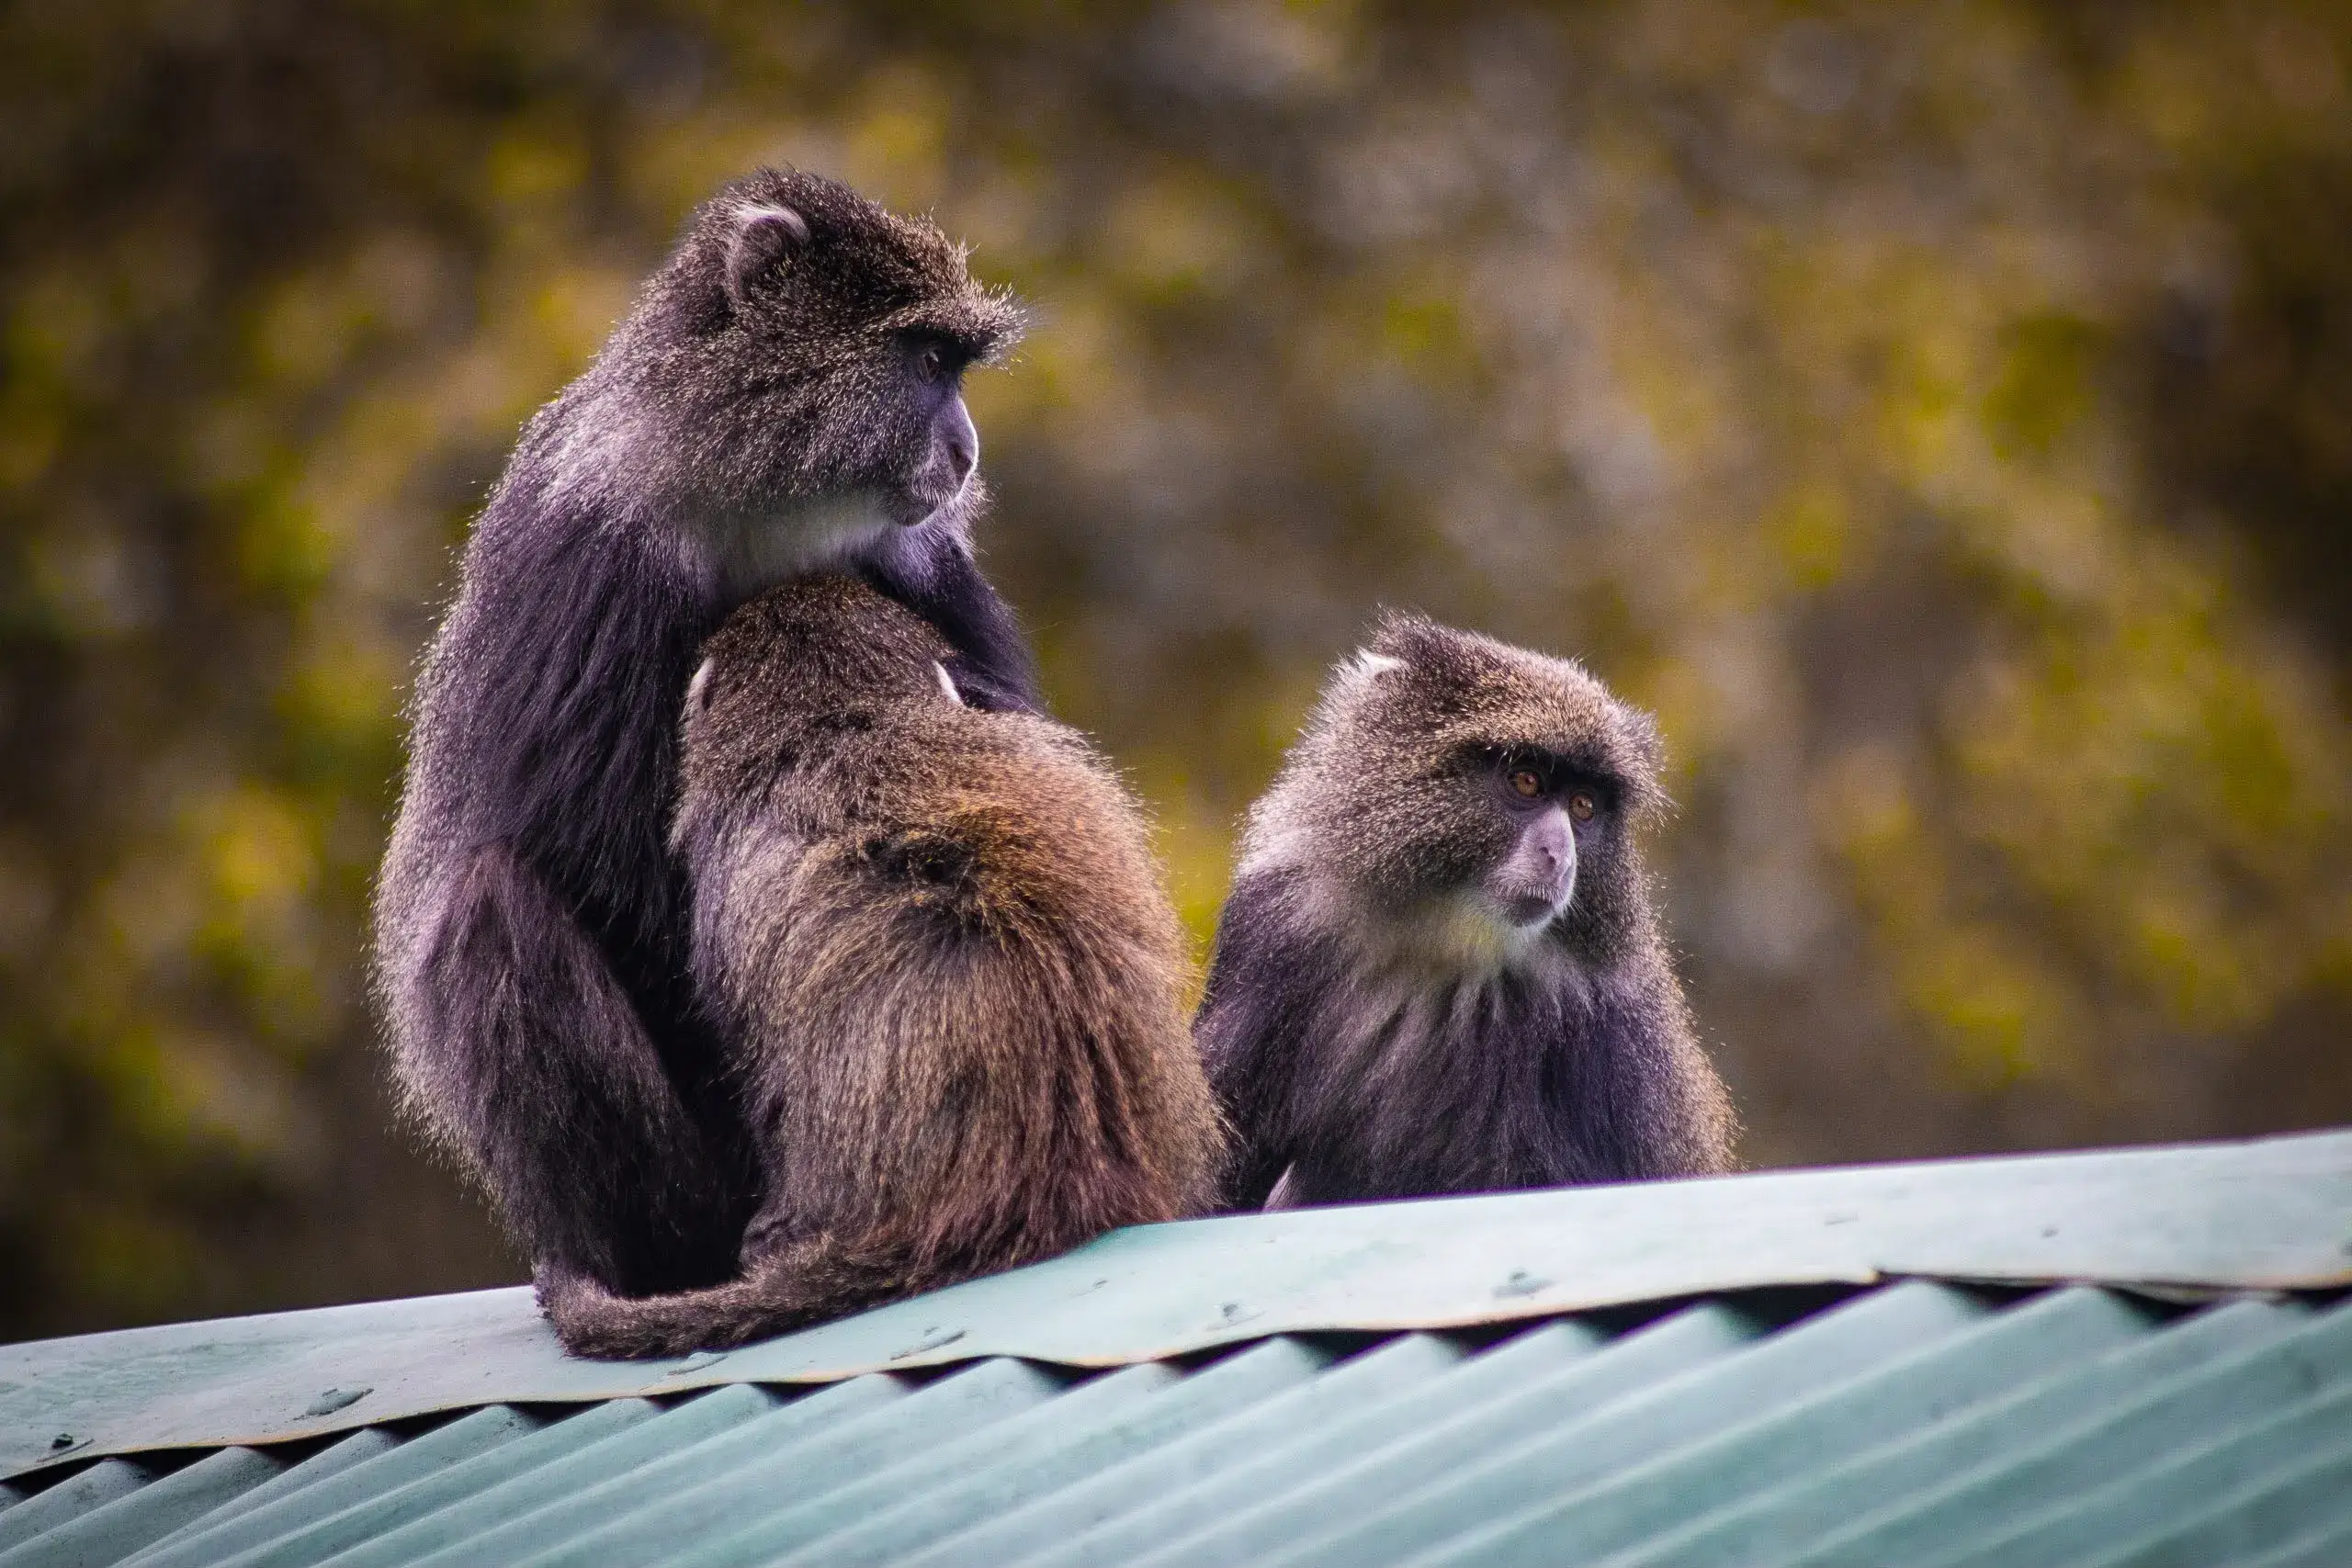 Samango monkeys spotted in Tanzanian jungles while trek